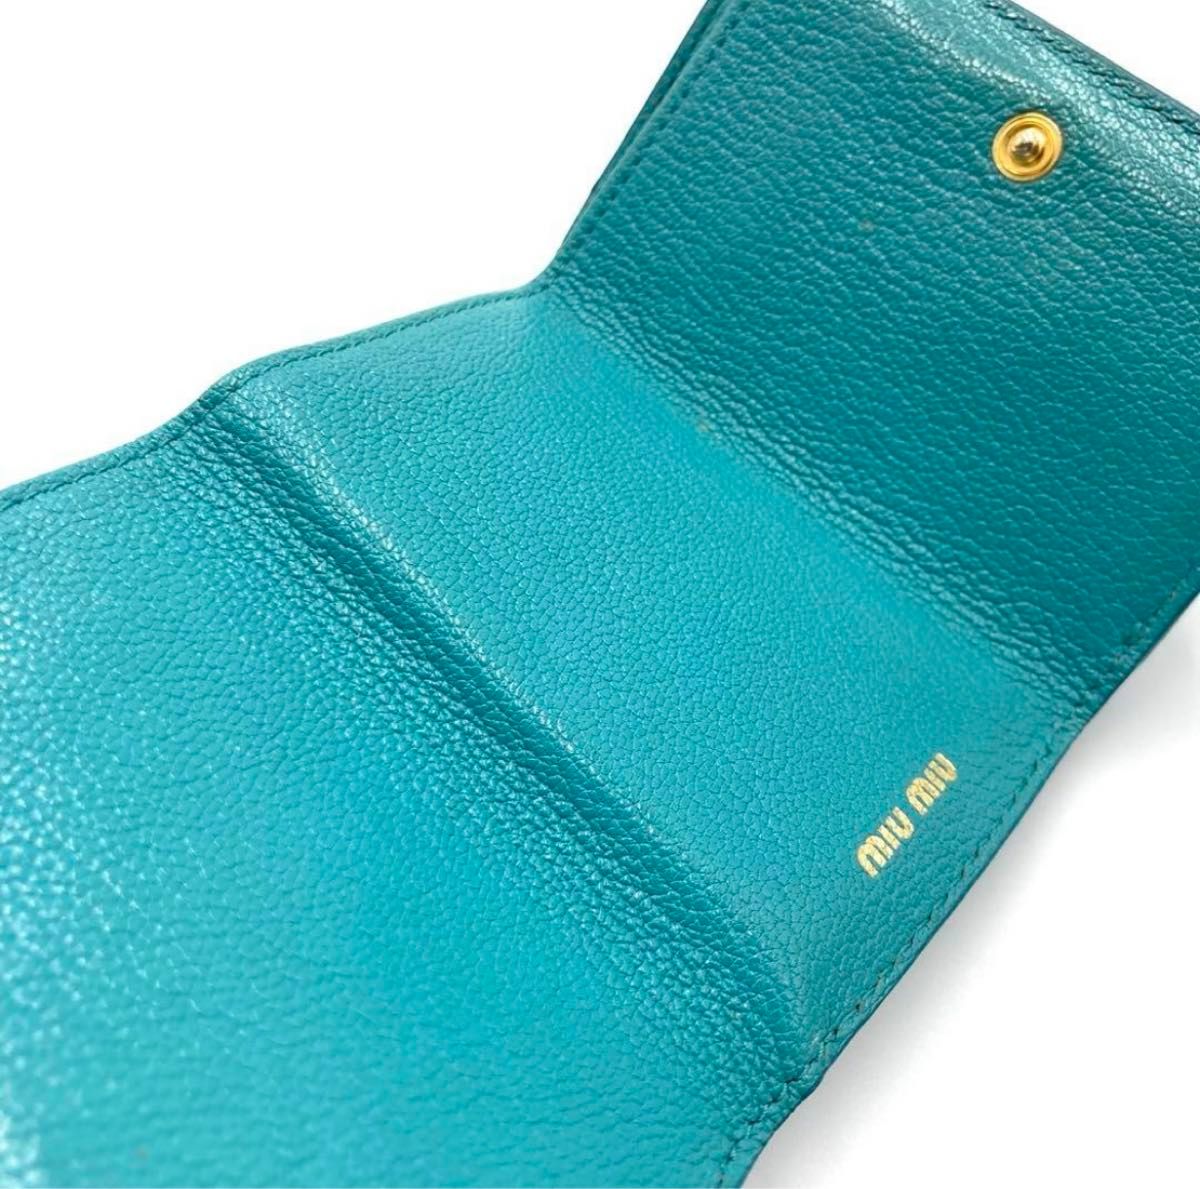 MIUMIU ミュウミュウ三つ折財布 ミニ財布 コンパクトウォレット ロゴ金具 ゴールド金具 レザー 